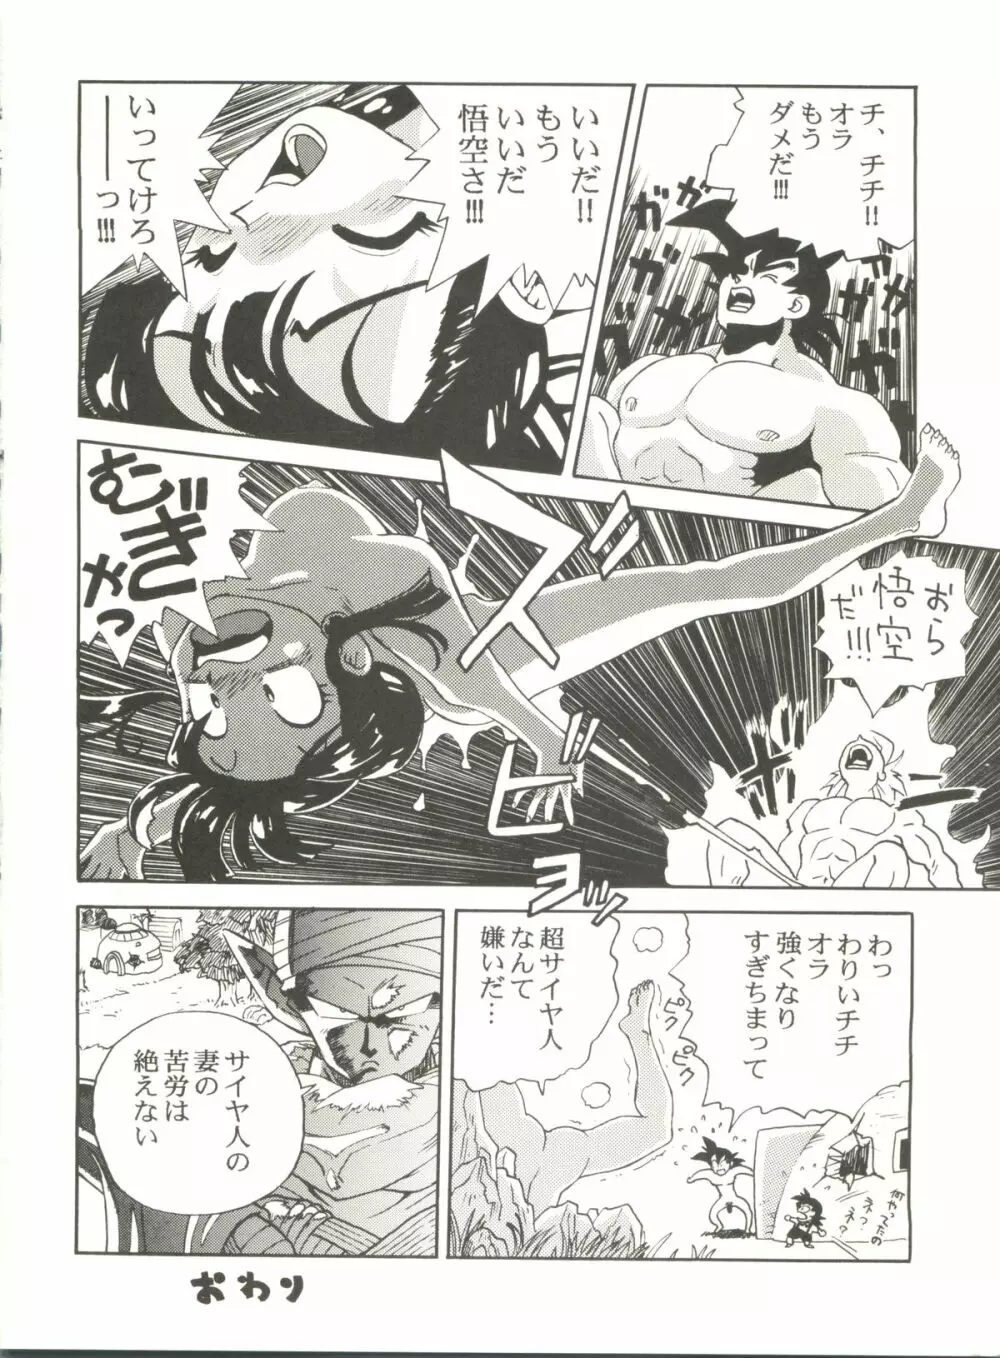 恐悦至極 - page34